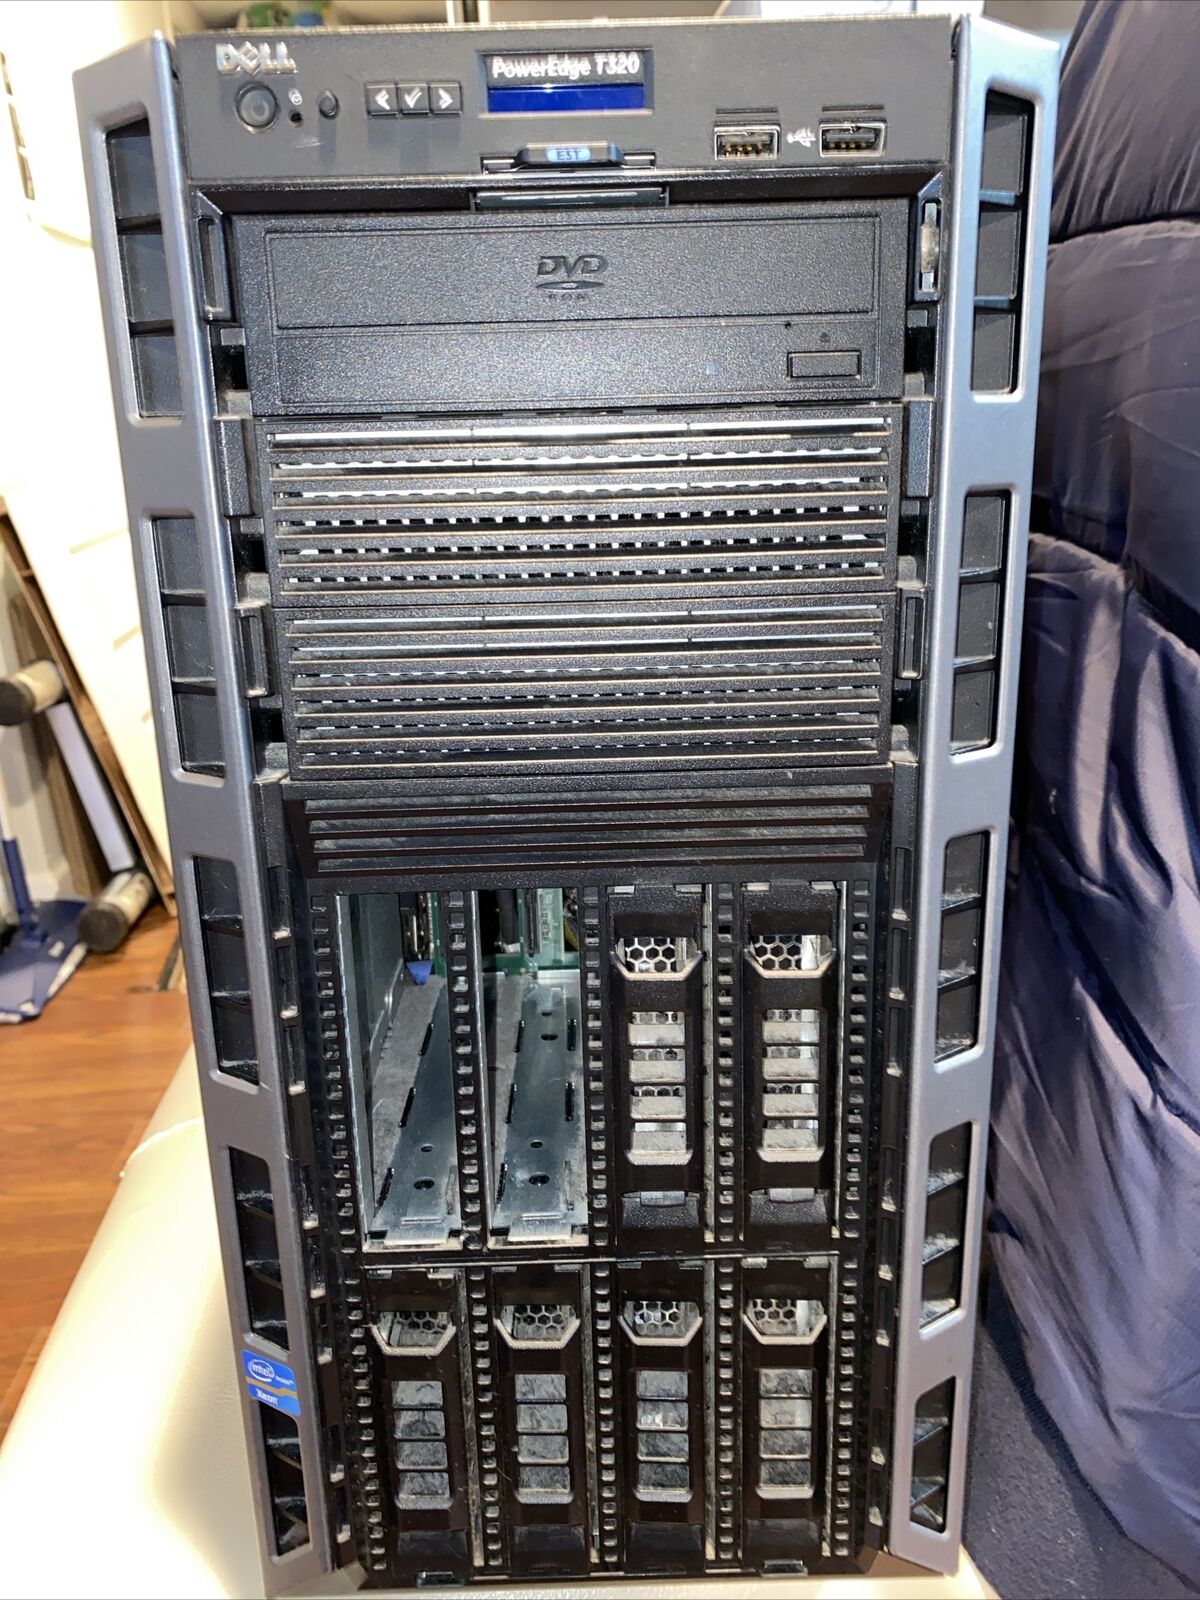 Dell powerEdge t320  server 8gb ram intel xeon e5-2403  Dual hot swap pow supply